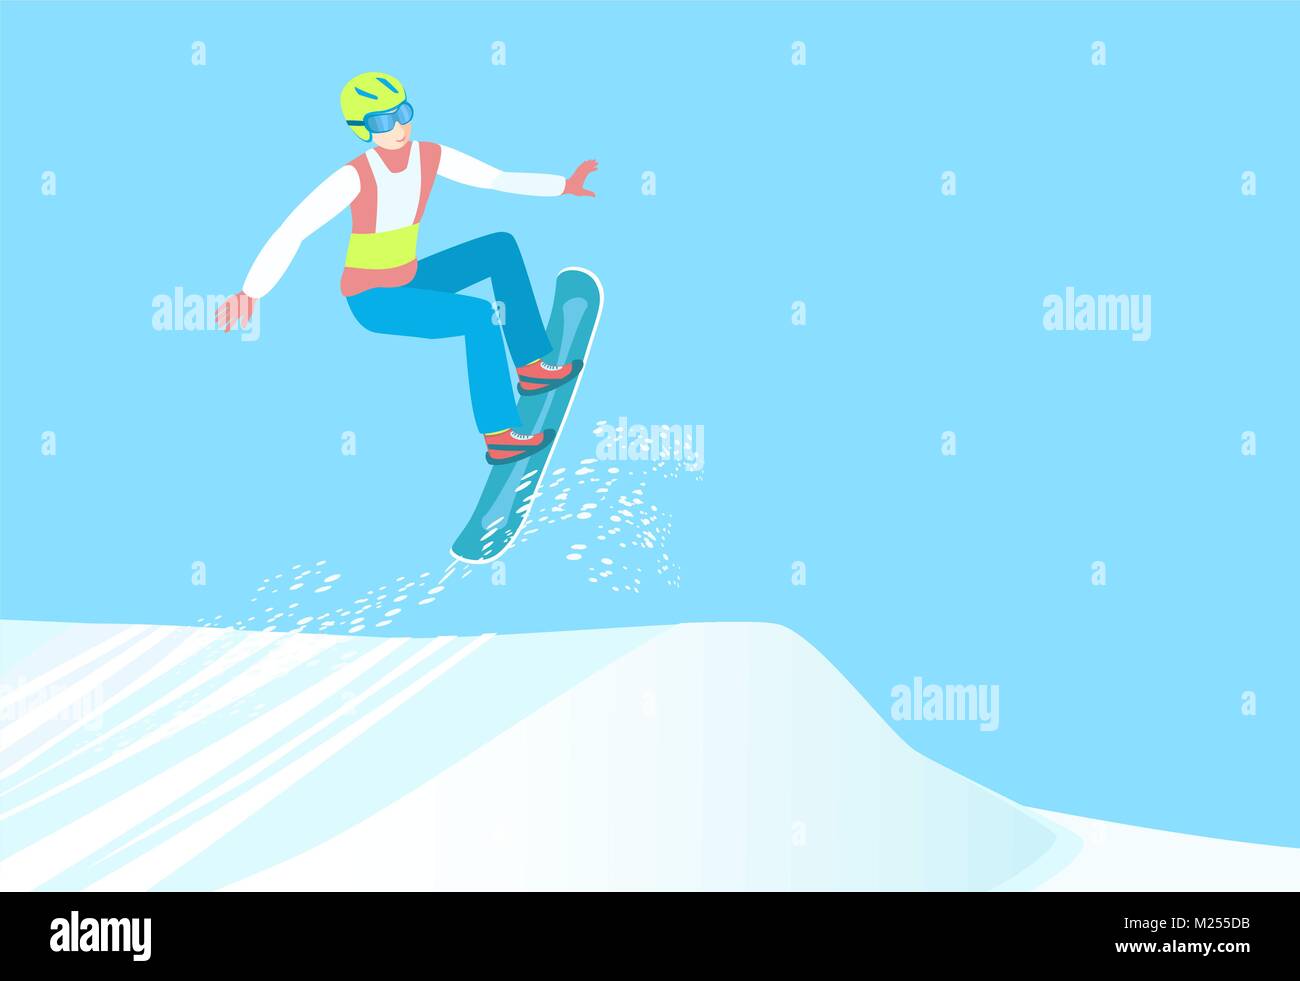 Professional Snowboarding, winter sport. Stock Vector